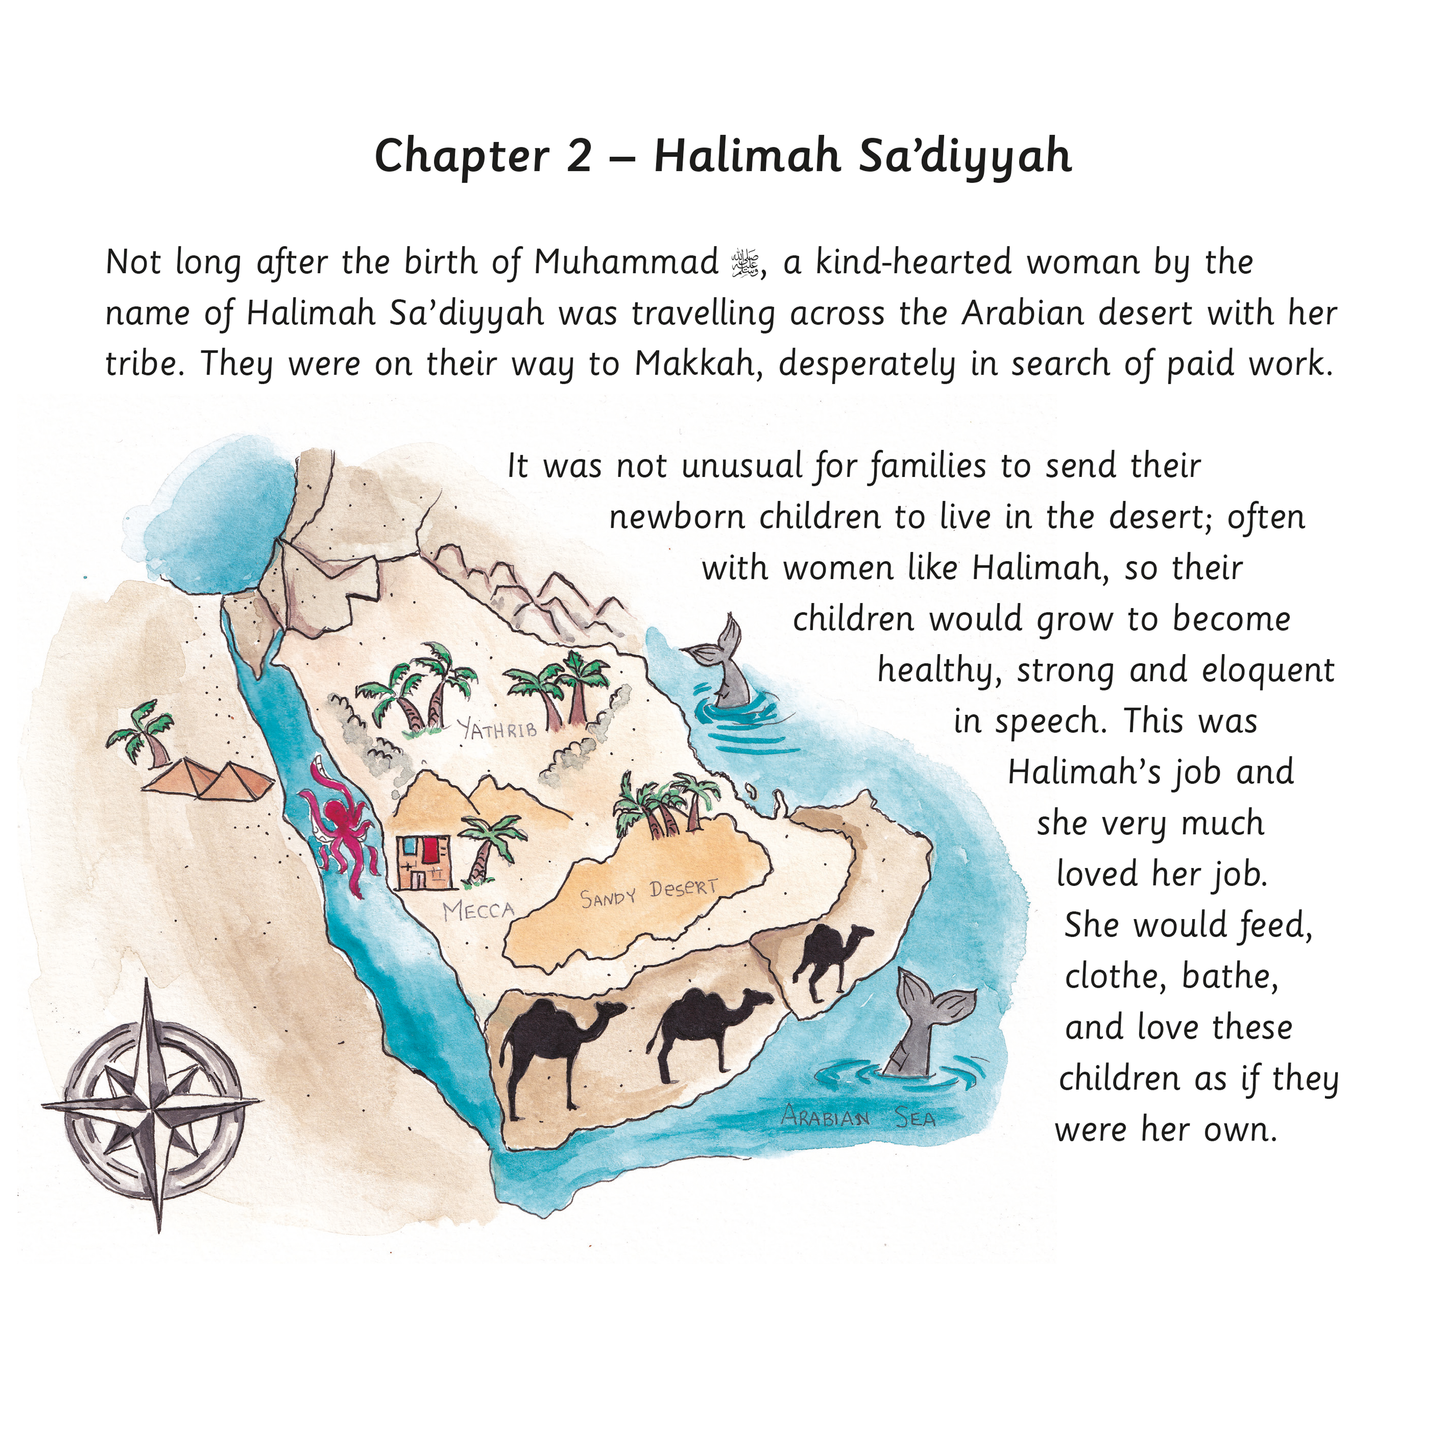 Prophet Muhammad - Where the Story Begins